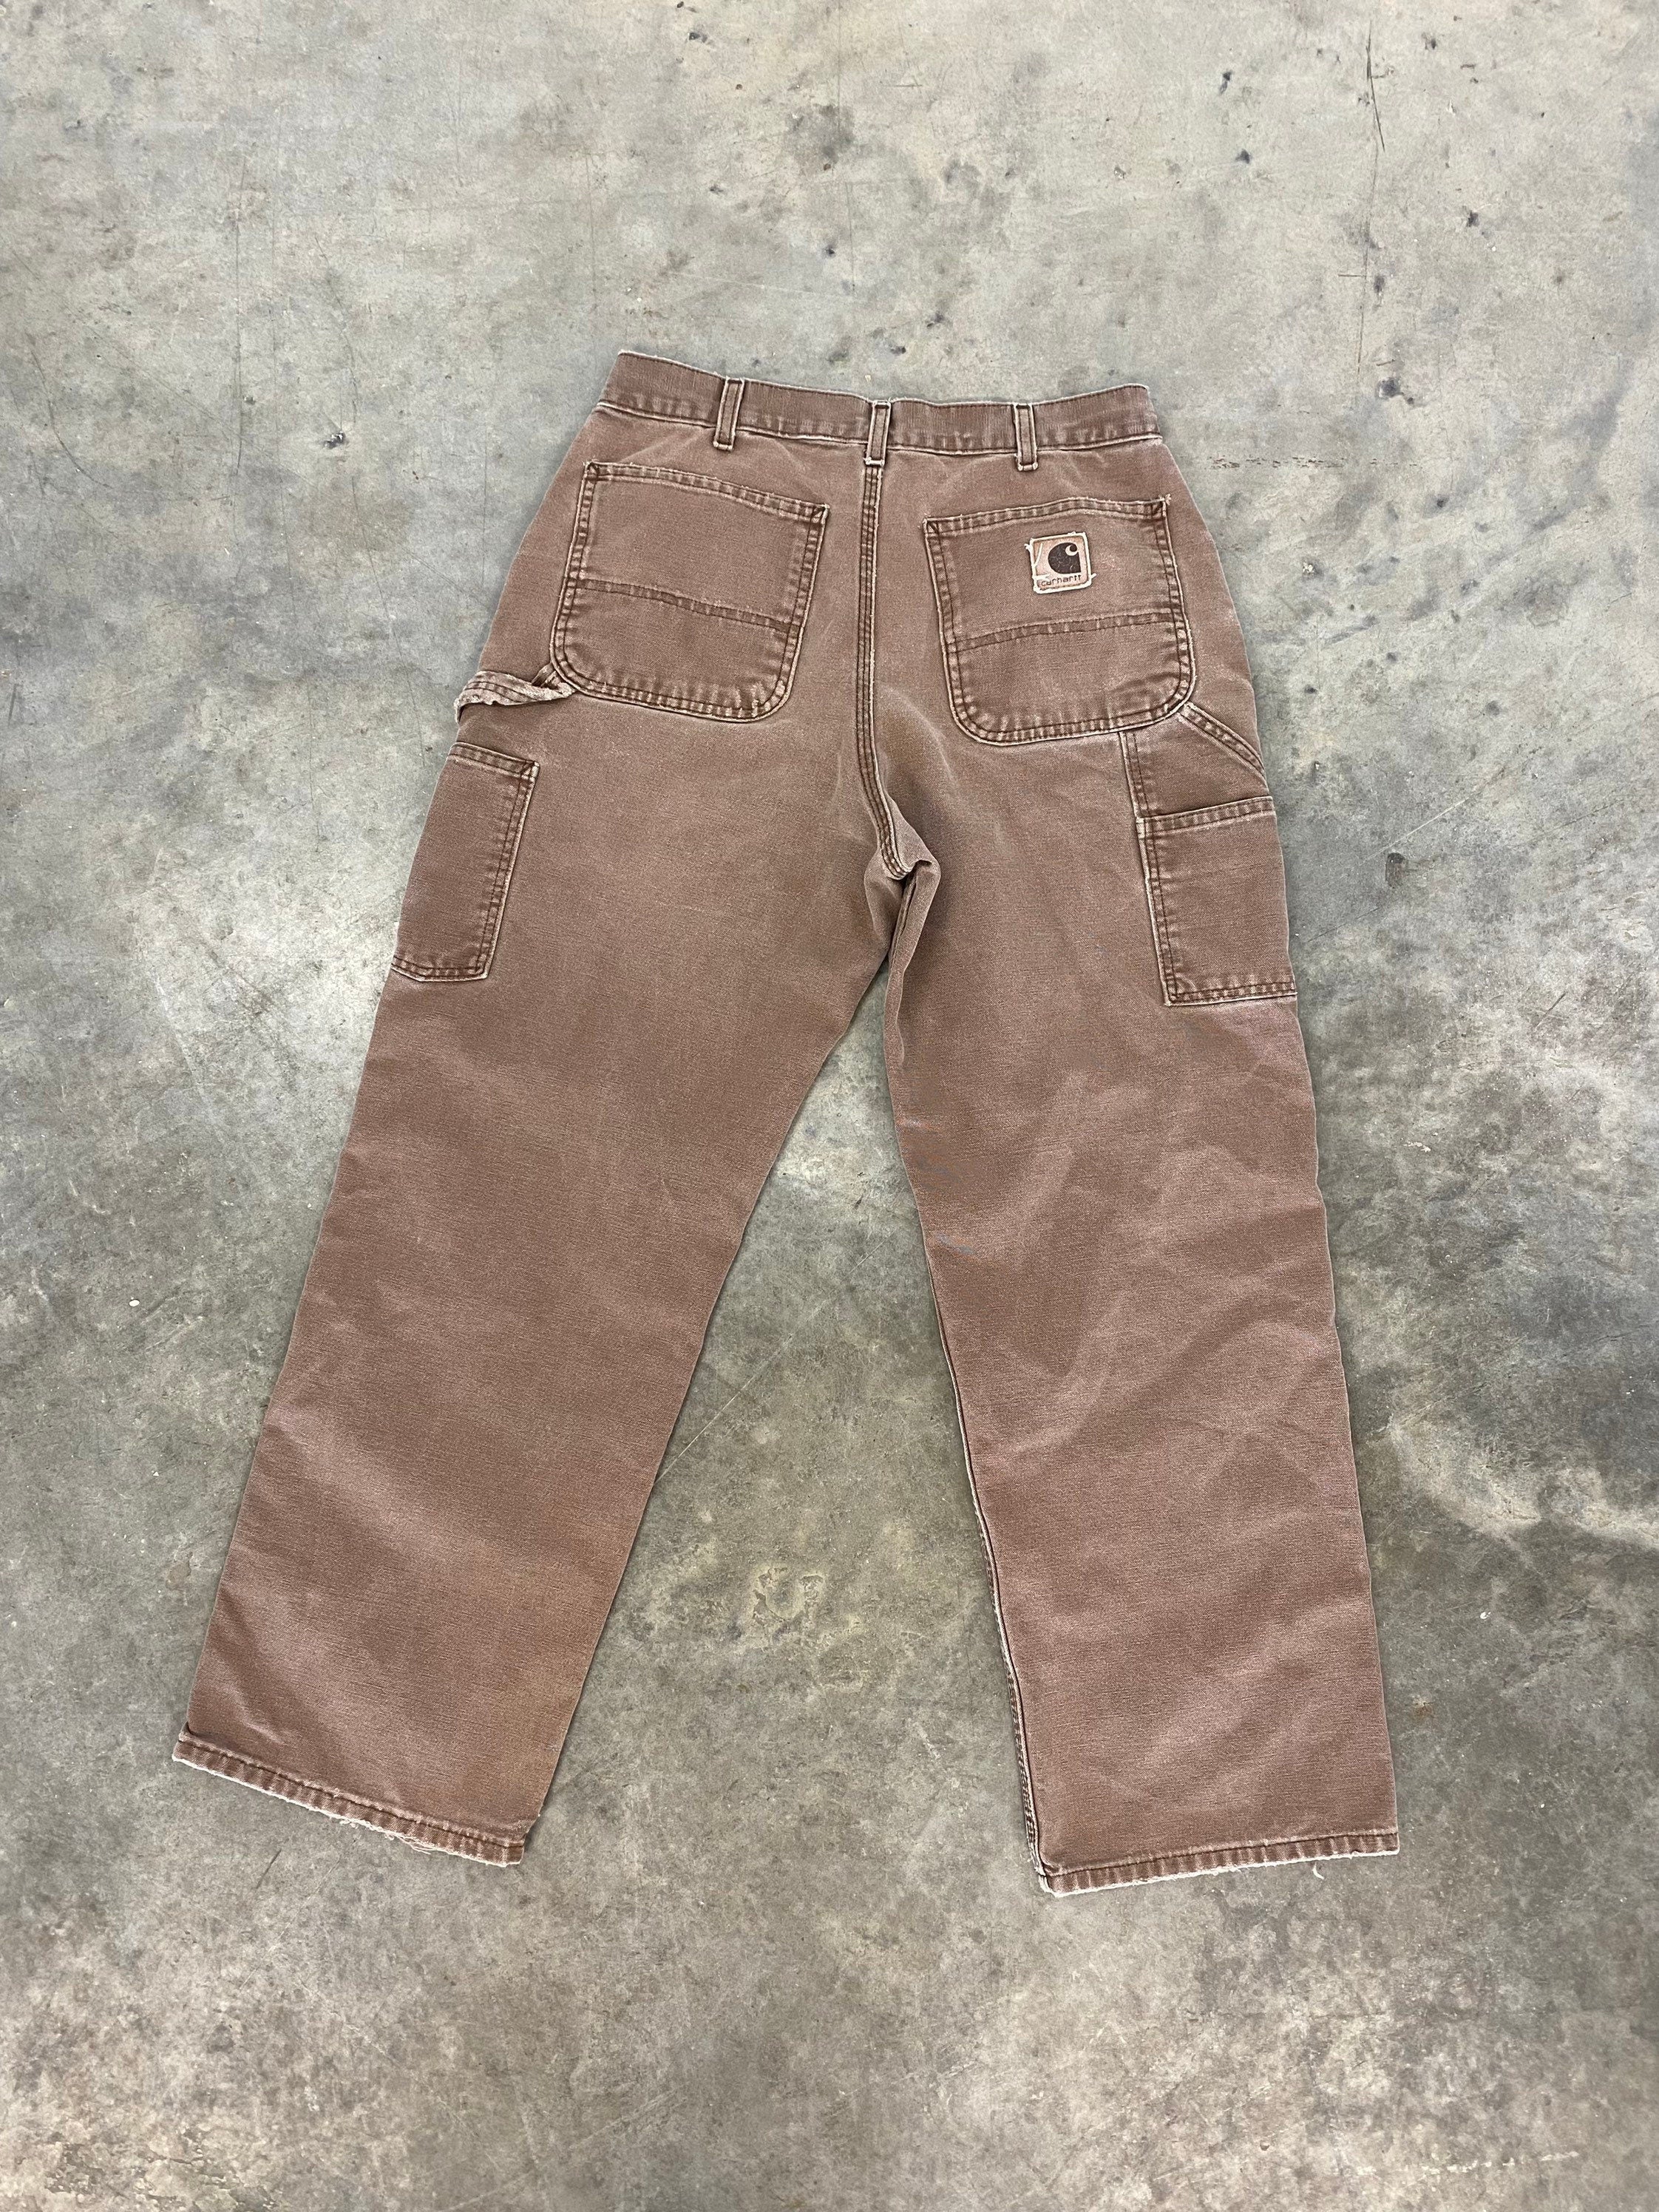 Vintage Carhartt Brown Work Carpenter Pants Size 30x29 – Thrift Sh!t Vintage